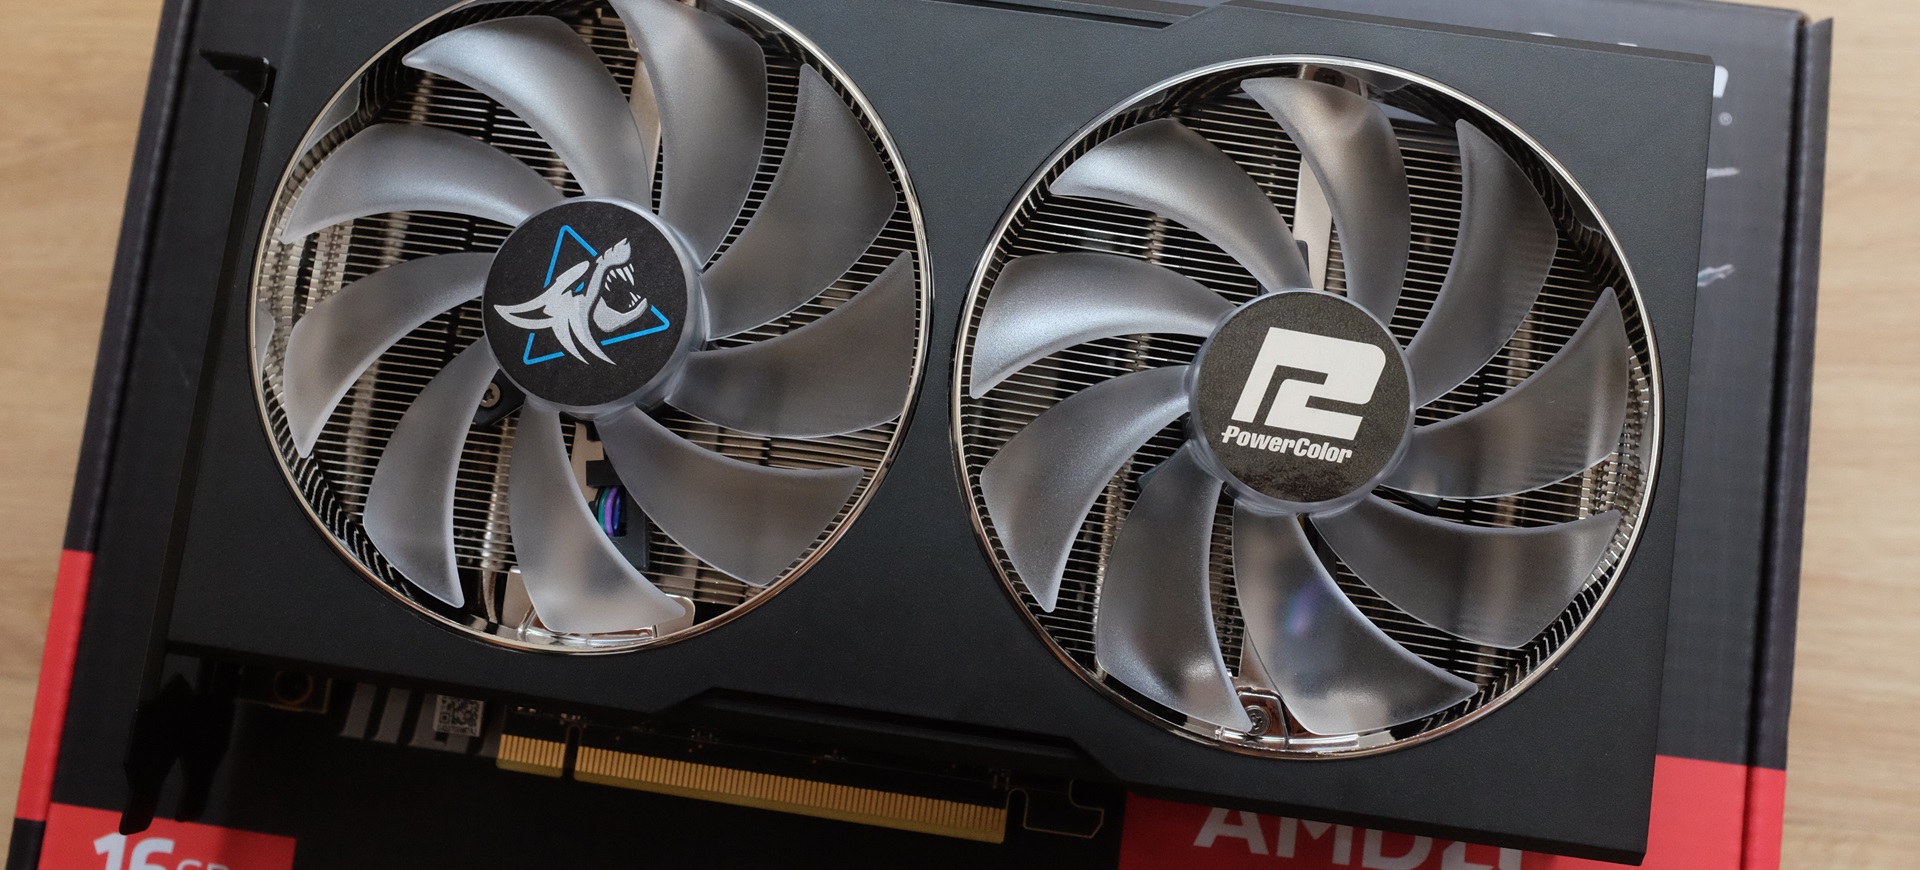 AMD RX 7600 XT – Đánh Giá Gaming Gear